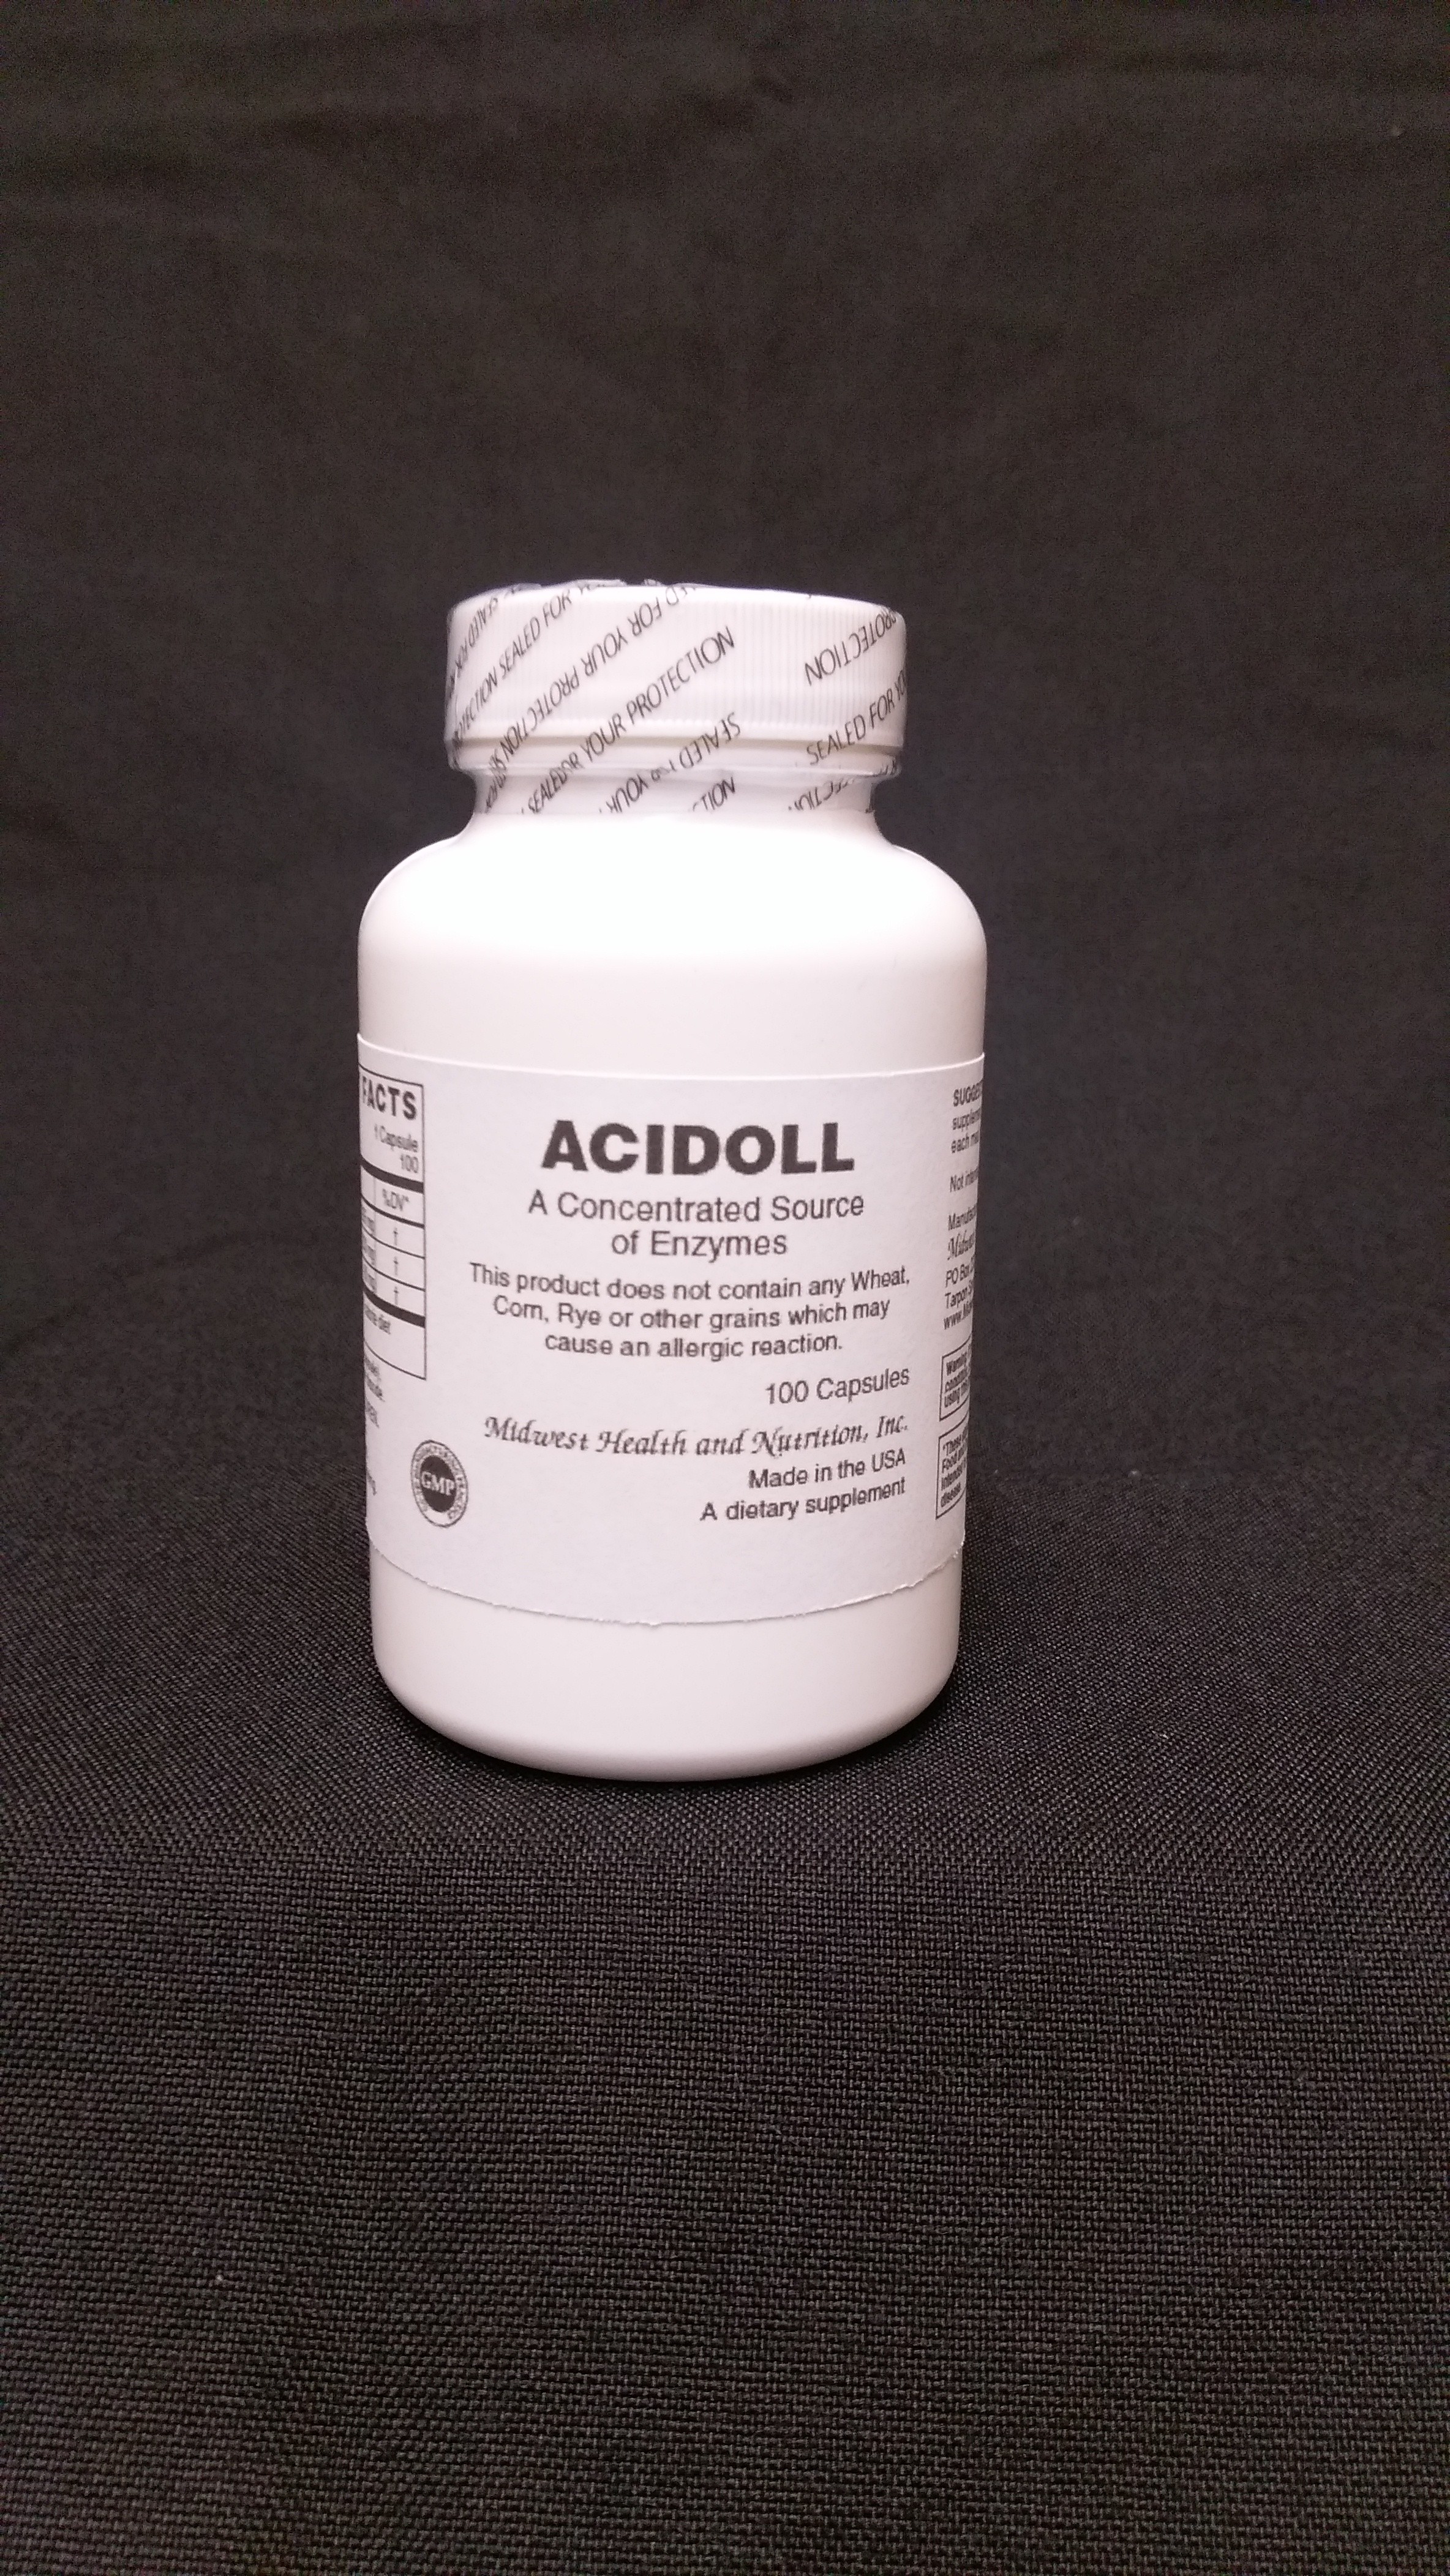 Acidoll